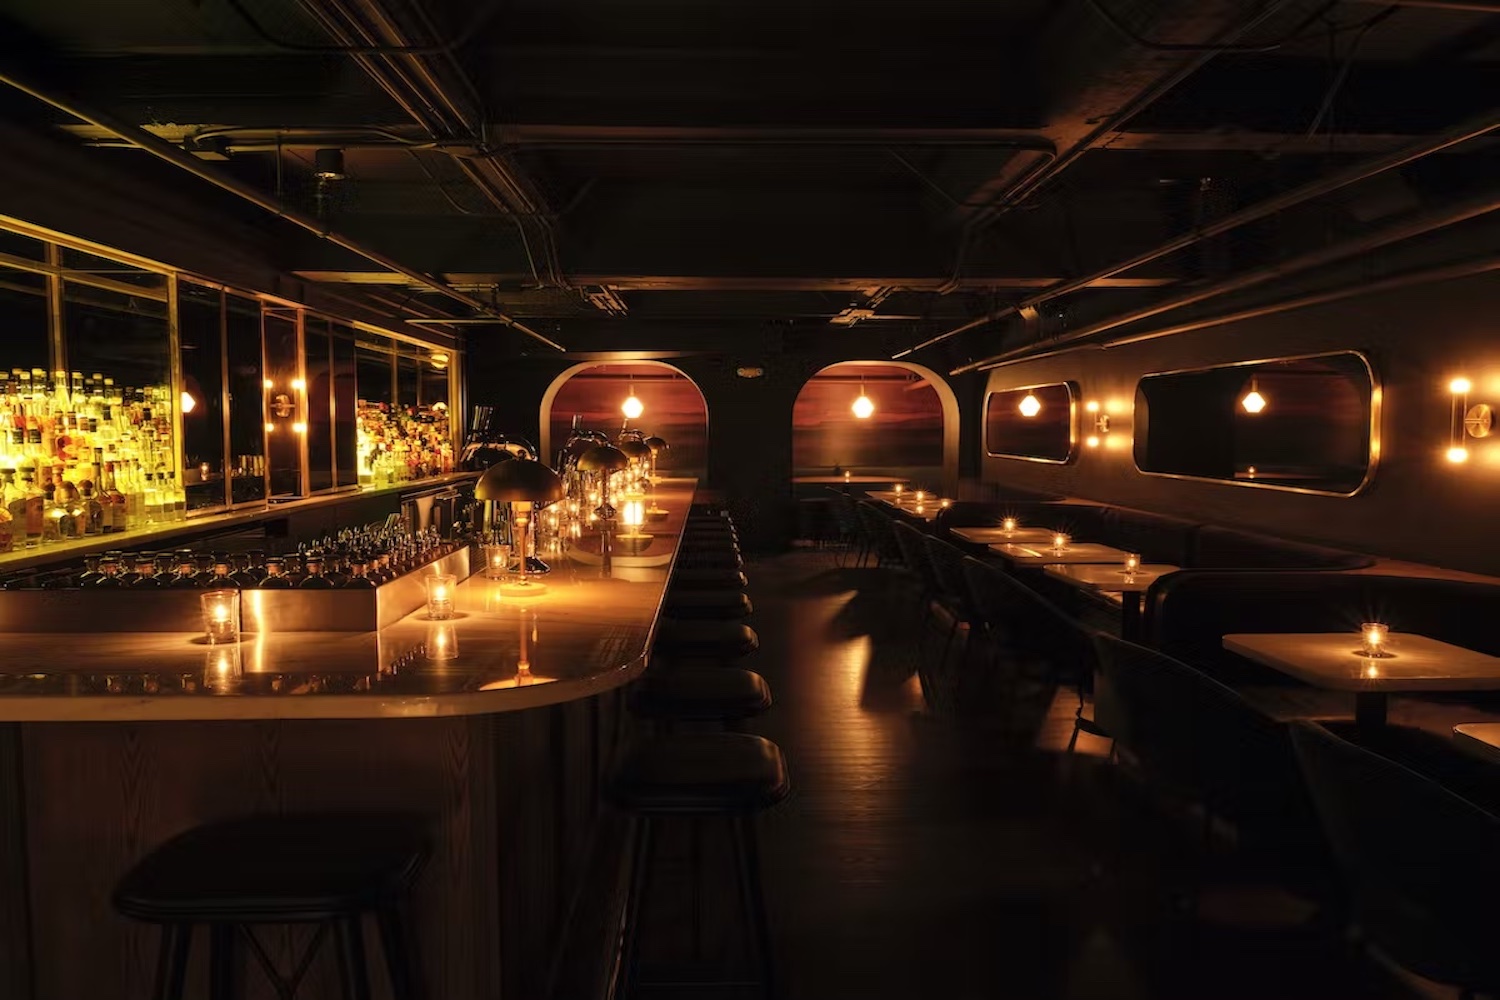 A dimly lit bar room